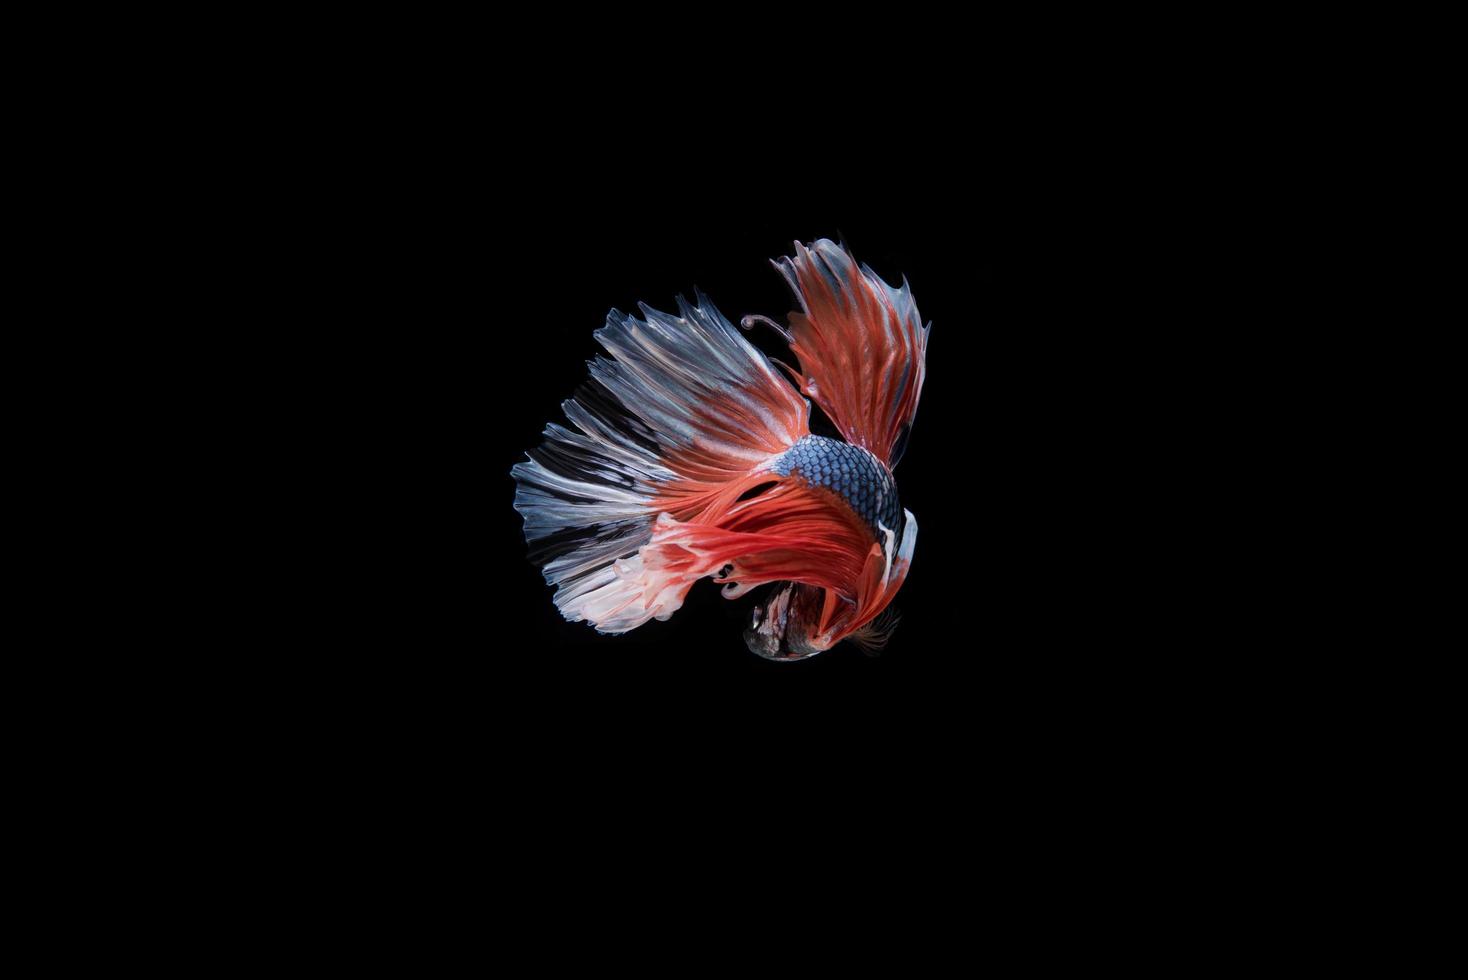 Beau poisson betta siamois coloré photo